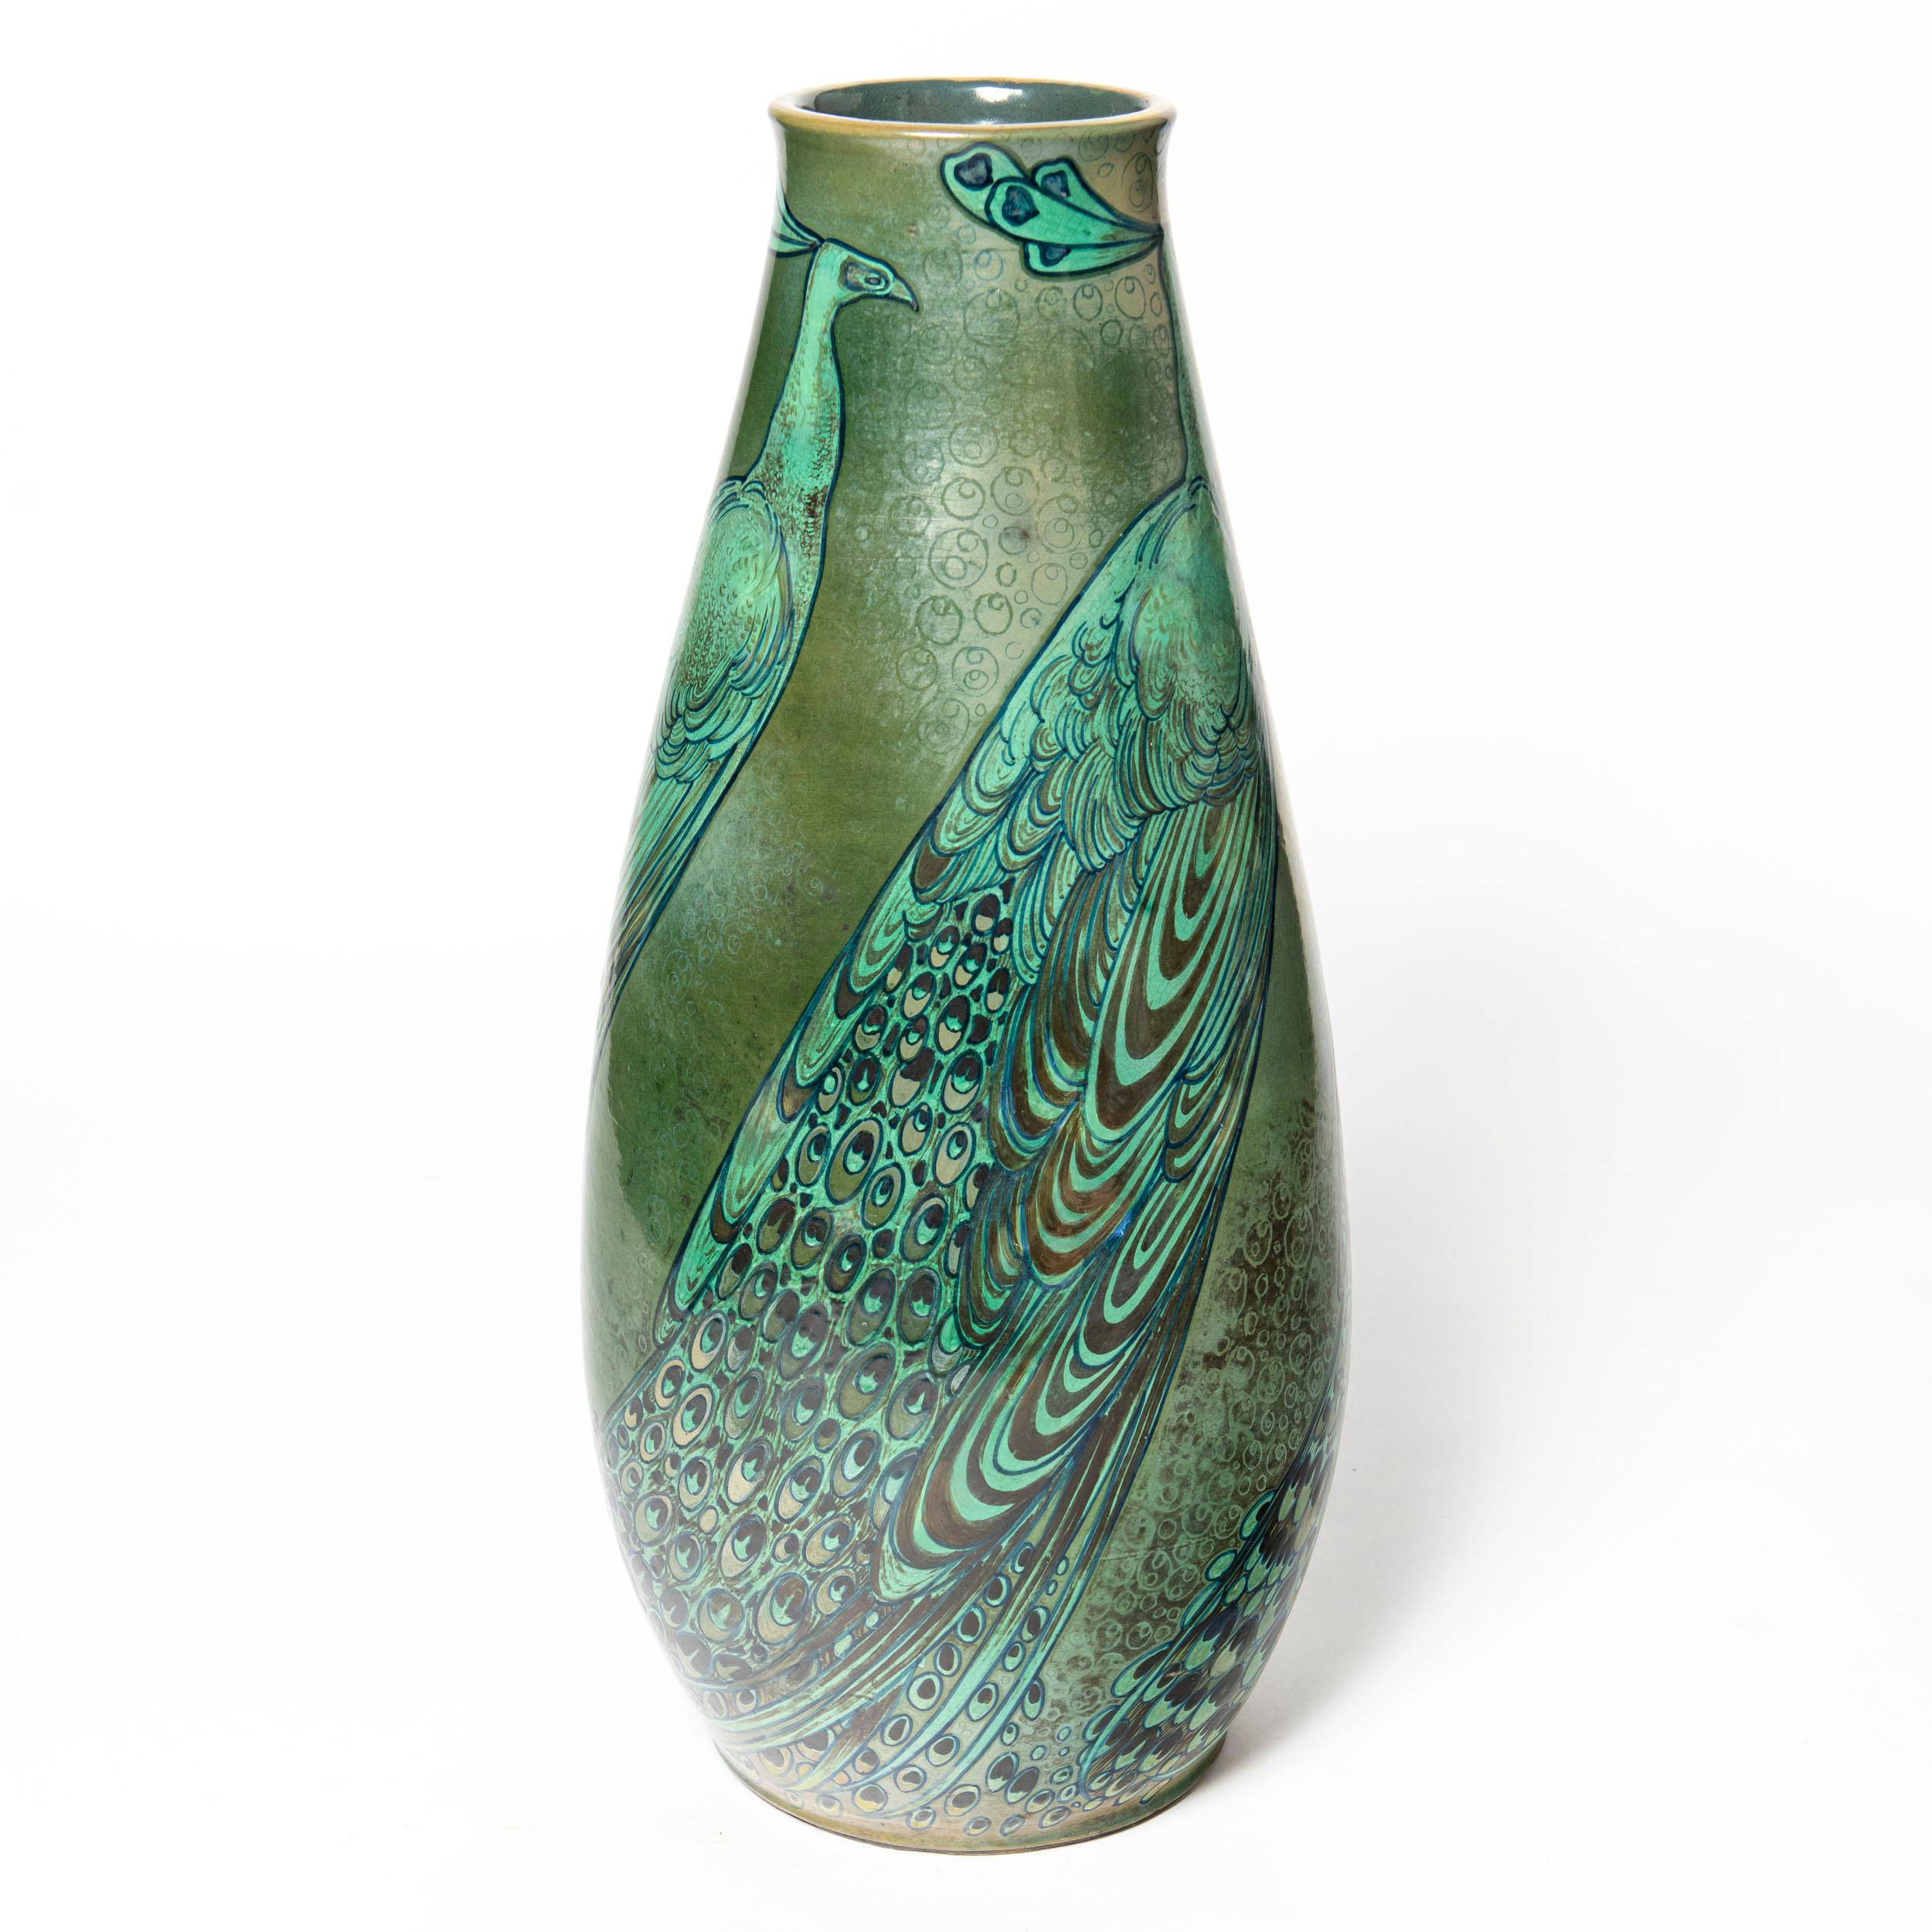 Enameled ceramic flower vase. France, early 20th century.